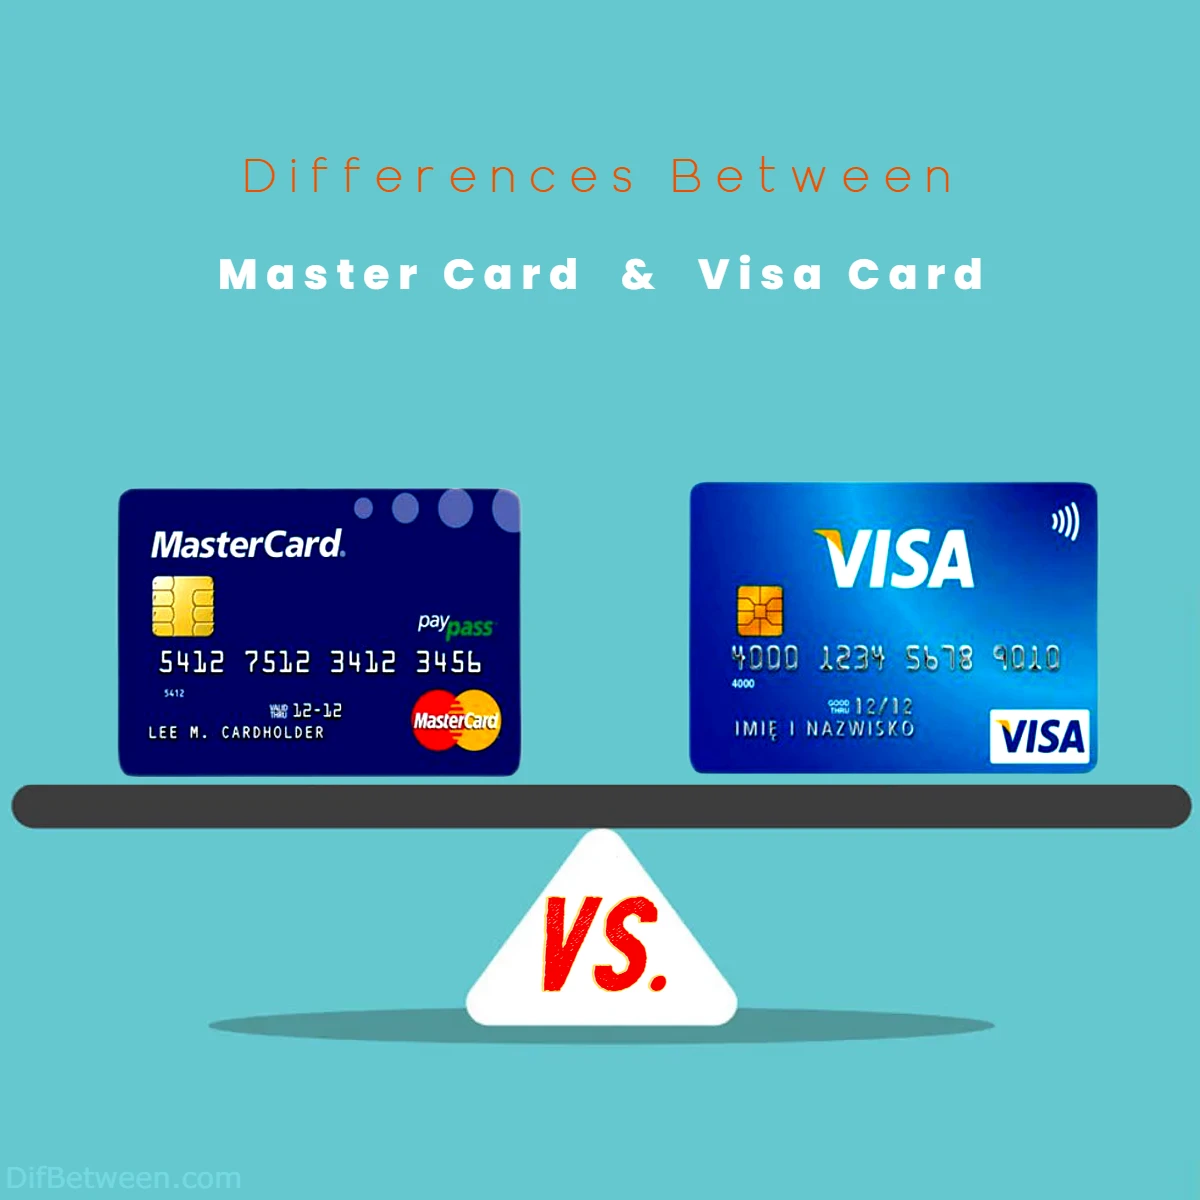 Differences Between Master Card vs Visa Card